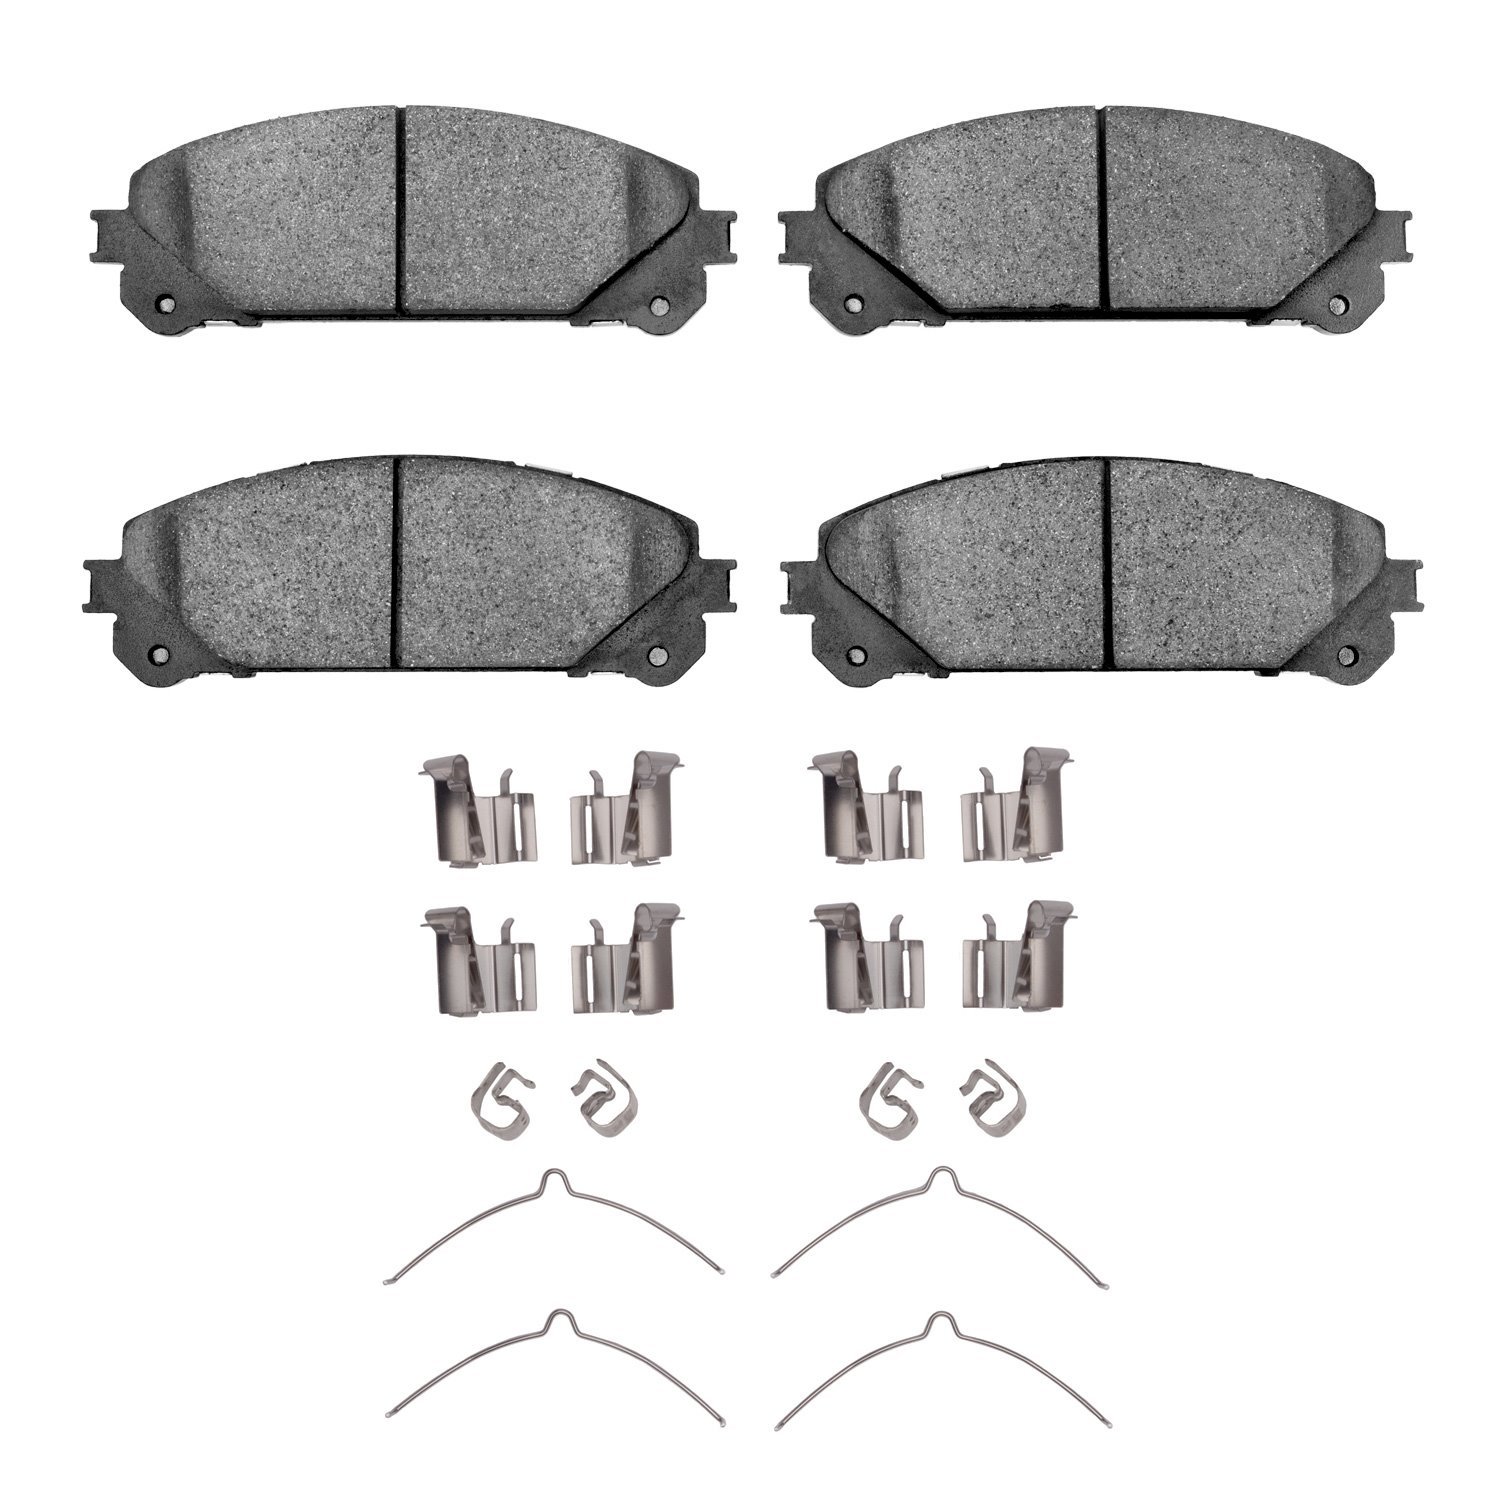 1552-1324-01 5000 Advanced Low-Metallic Brake Pads & Hardware Kit, Fits Select Lexus/Toyota/Scion, Position: Front